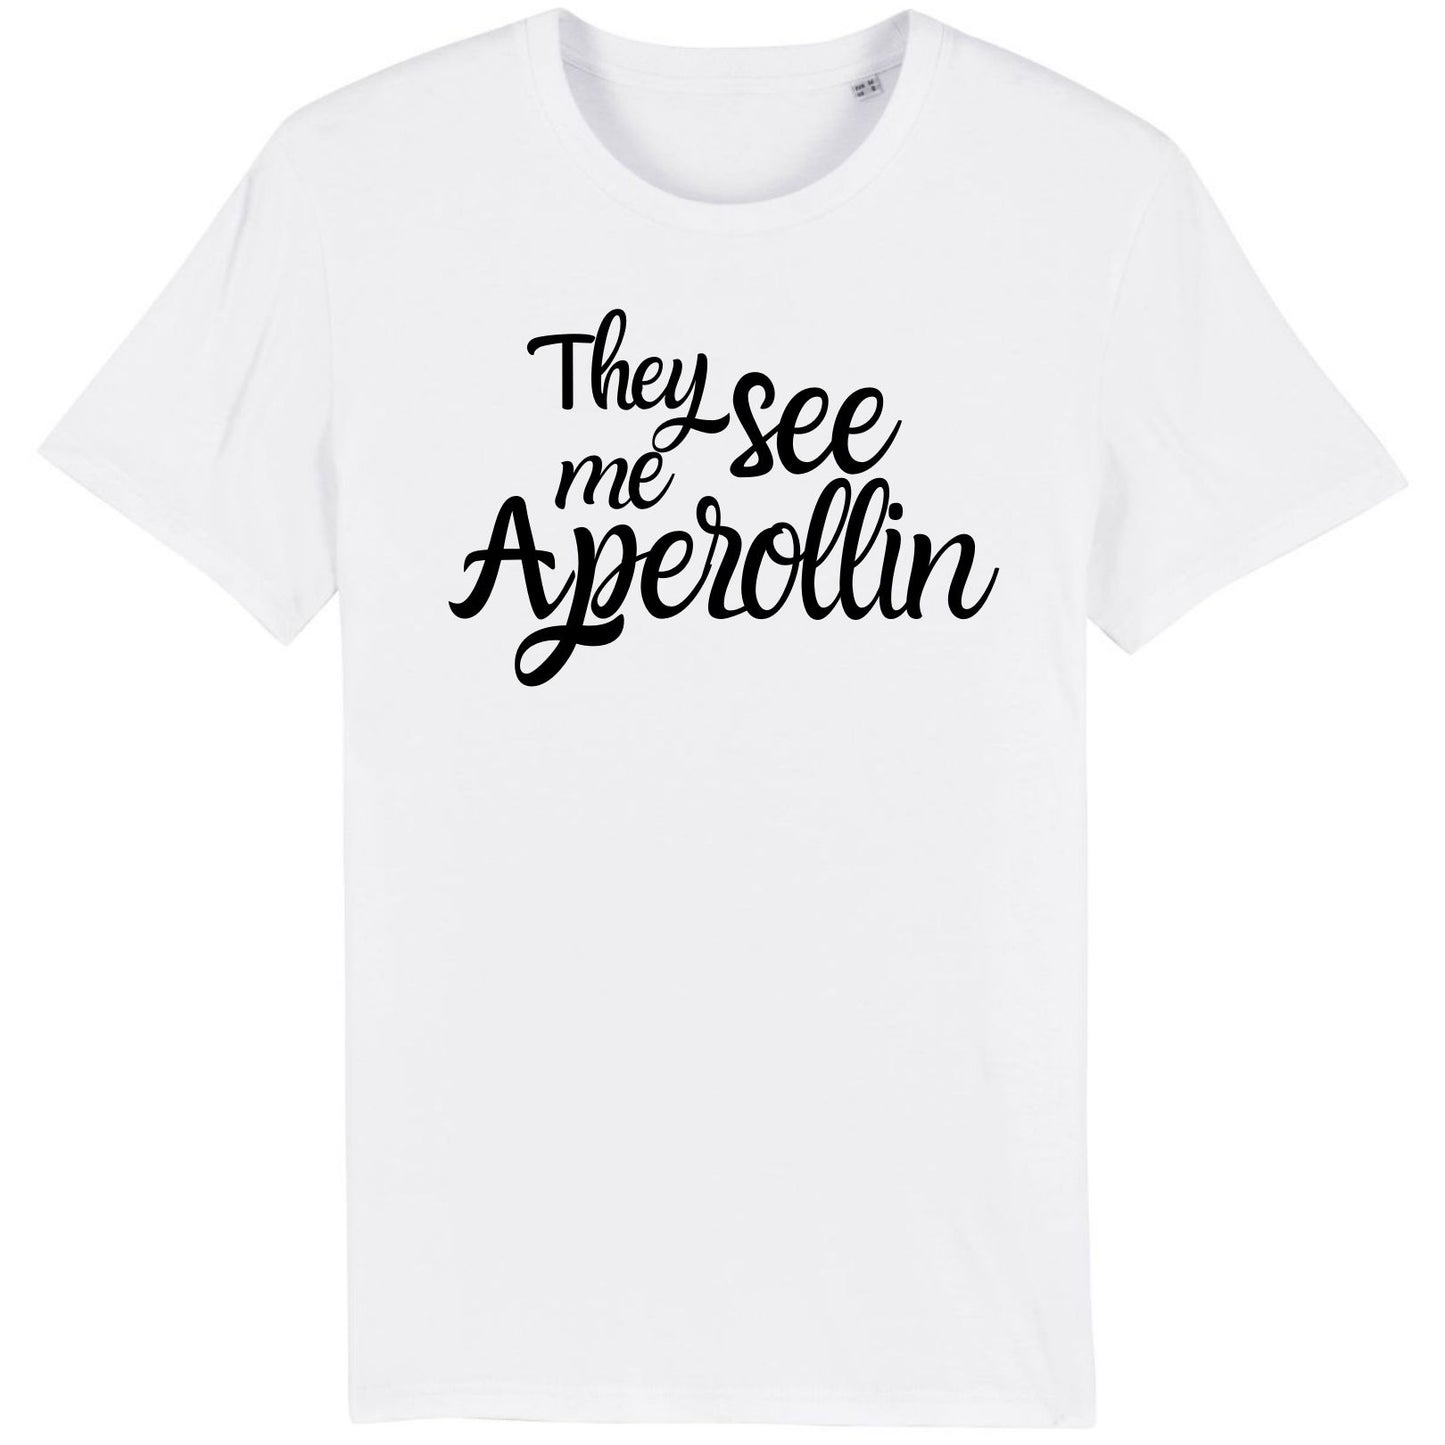 They see me Aperollin- Unisex Organic Shirt